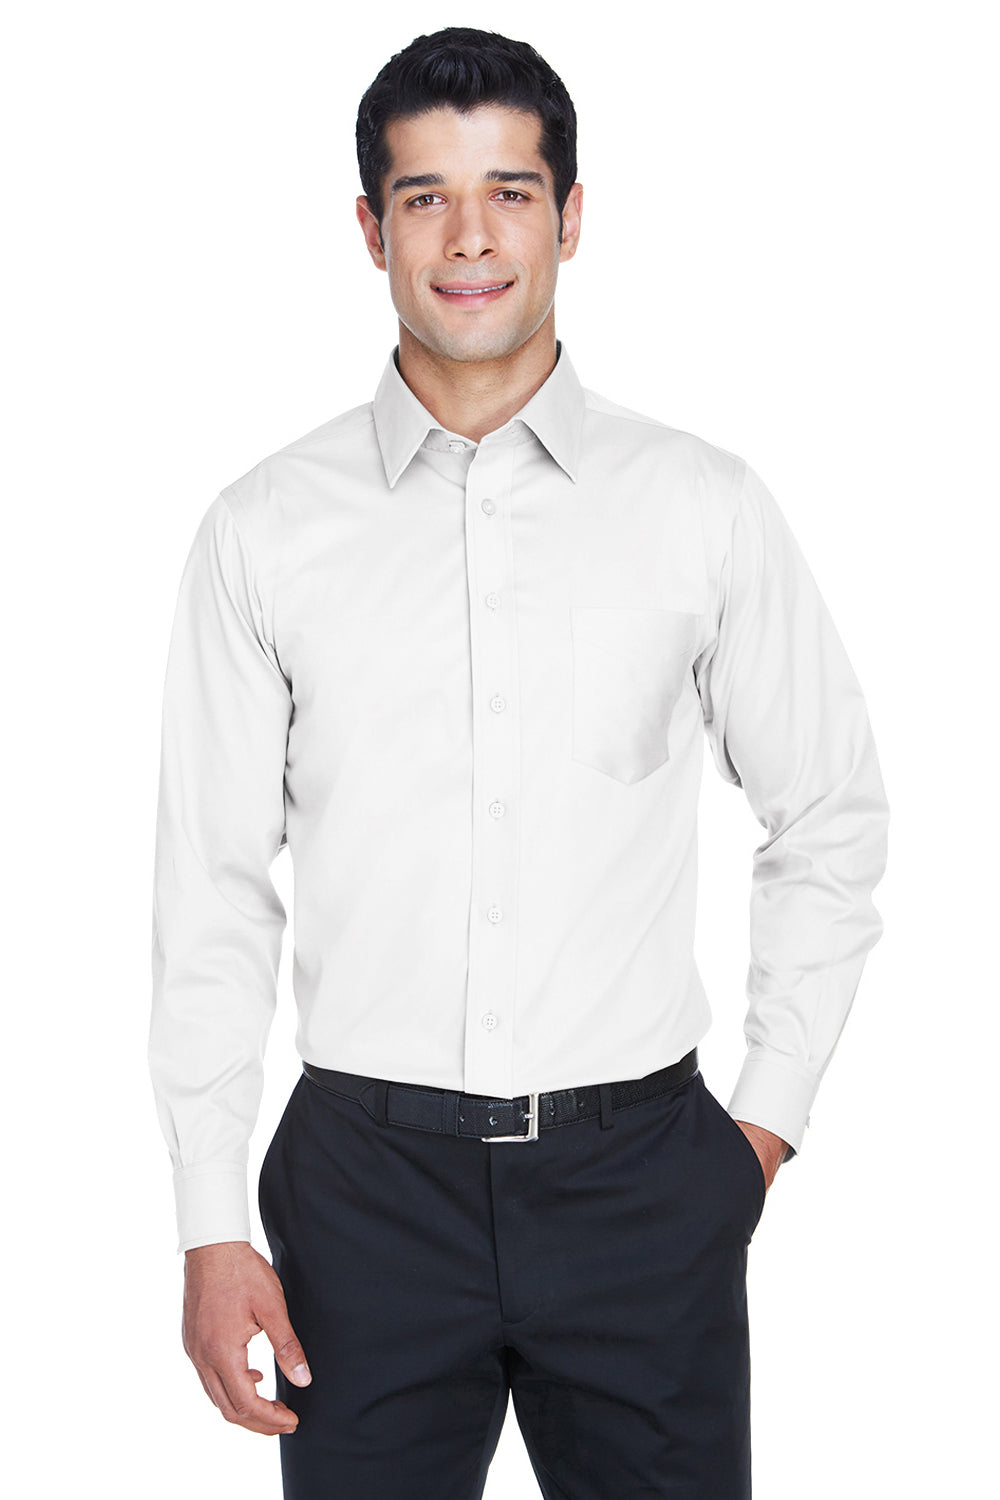 Devon & Jones DG530 Mens Crown Woven Collection Wrinkle Resistant Long Sleeve Button Down Shirt w/ Pocket White Front